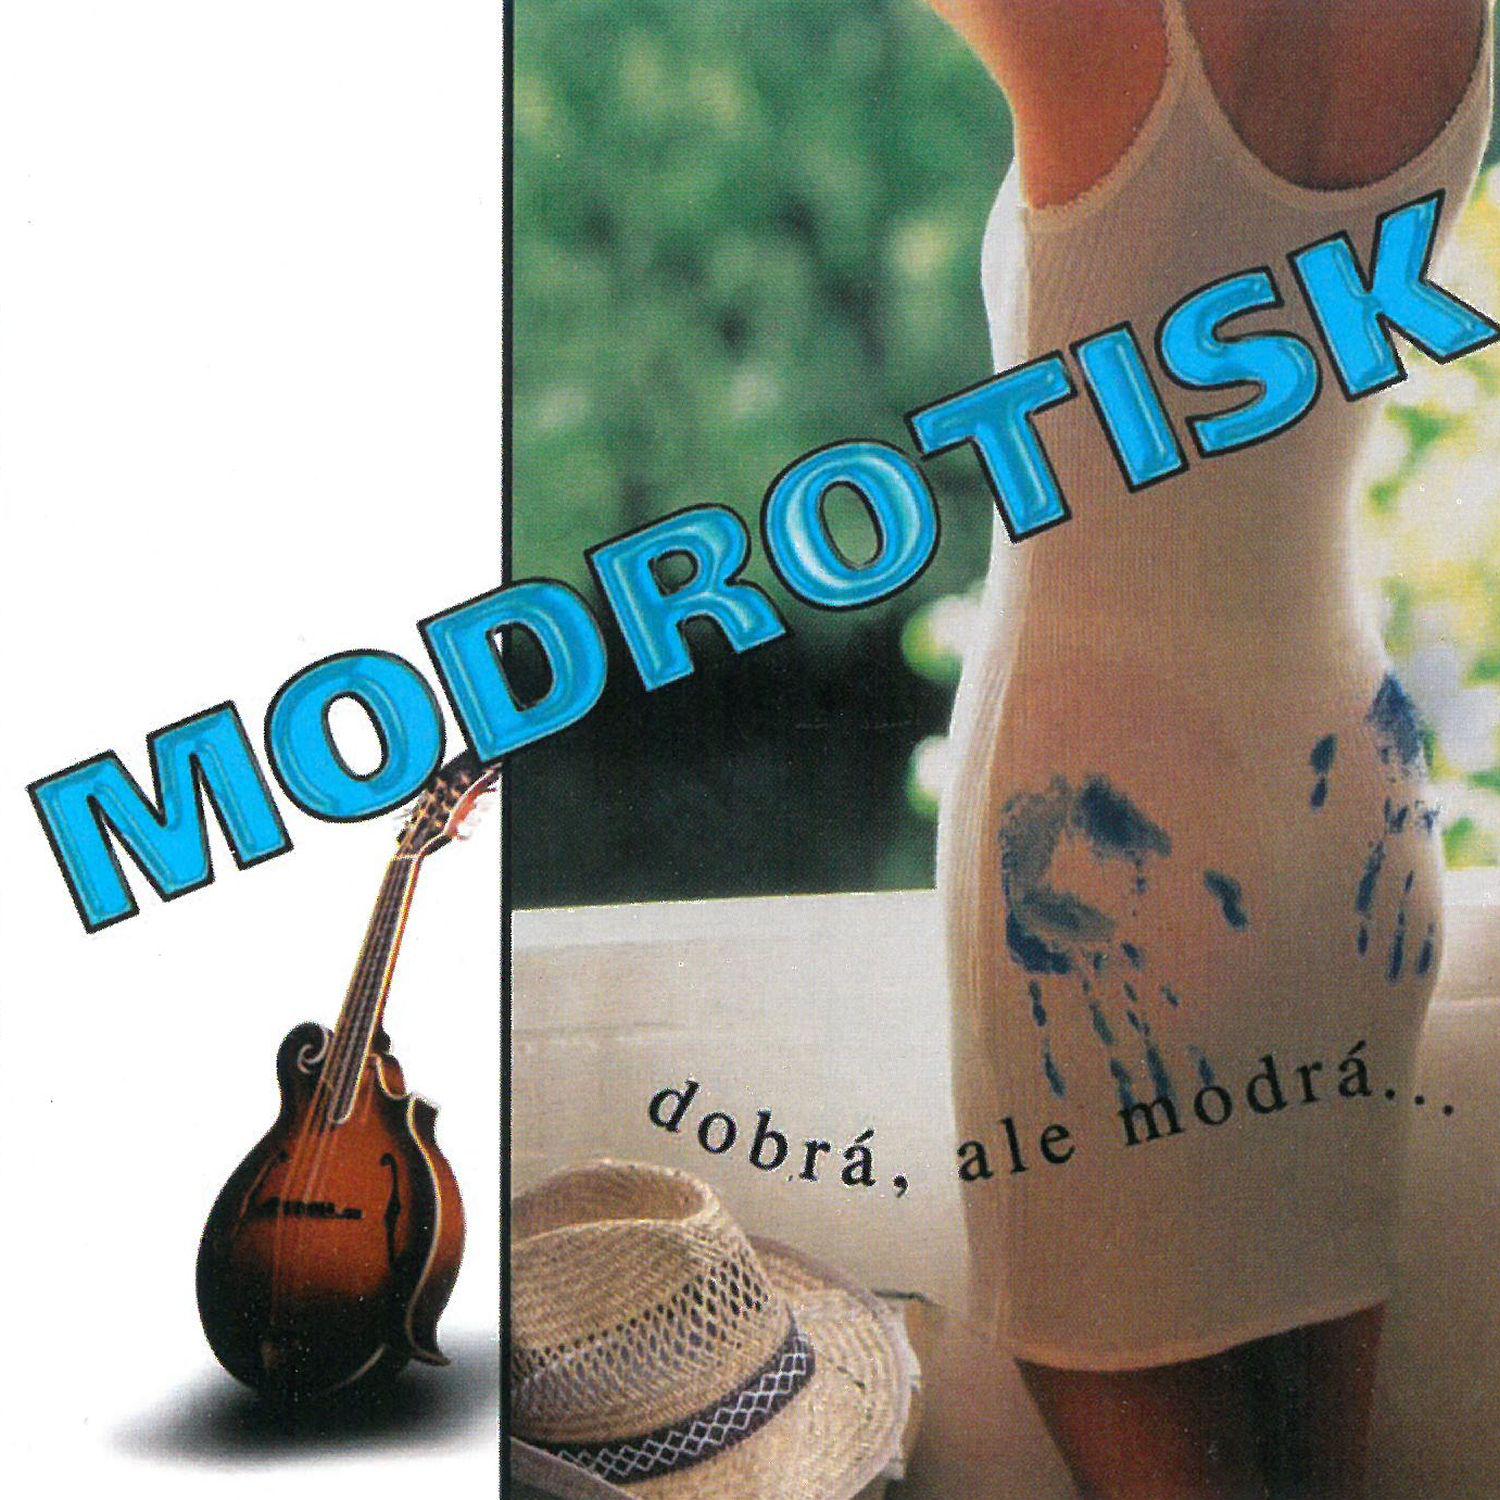 CD Shop - MODROTISK DOBRA, ALE MODRA...